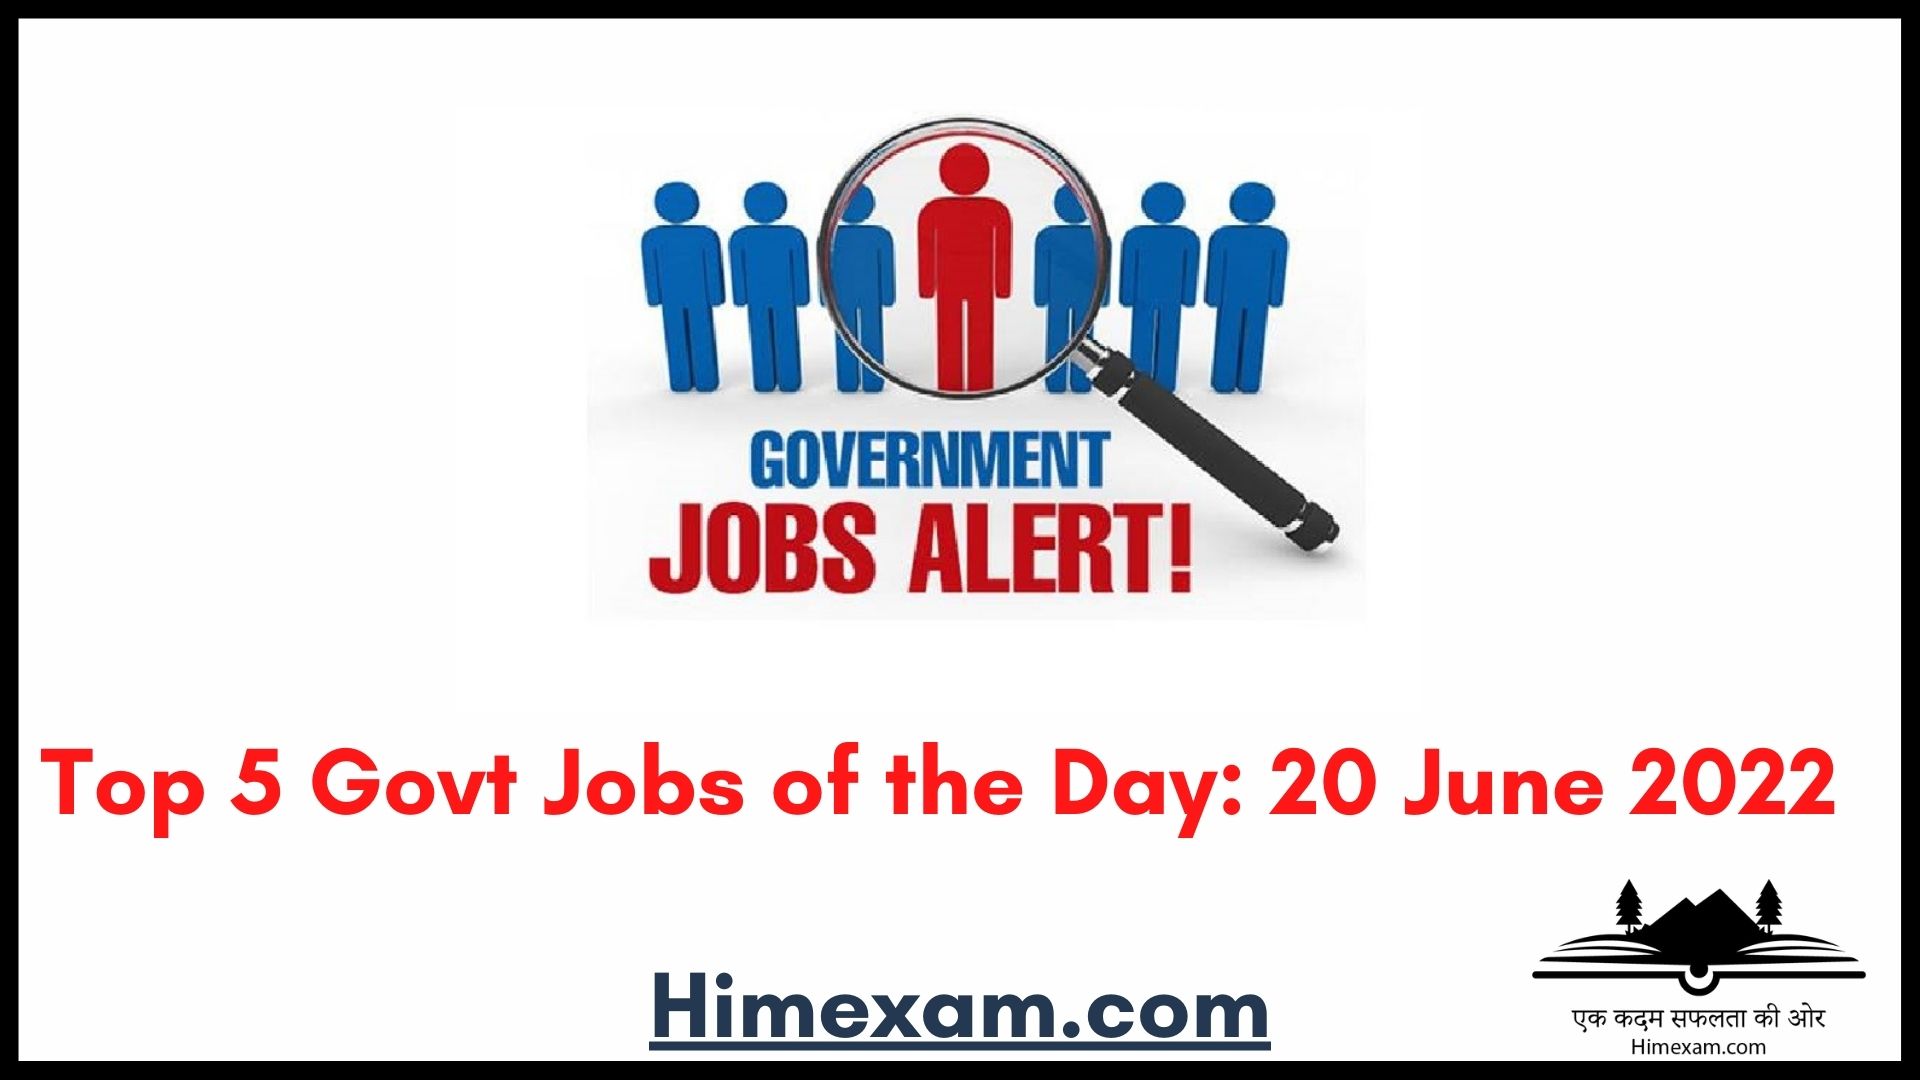 Top 5 Govt Jobs of the Day: 20 June 2022